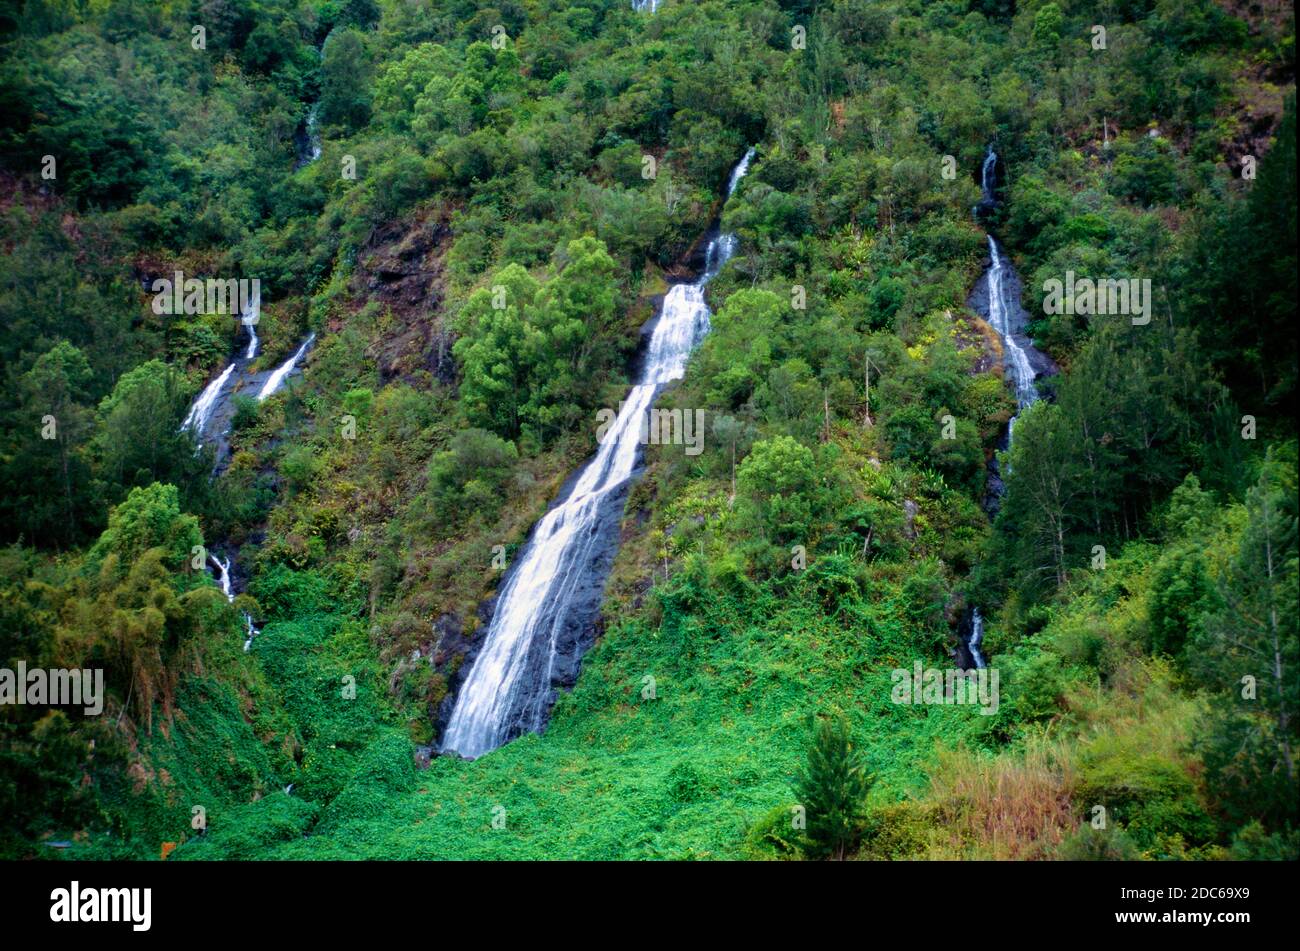 Brautschleier Wasserfall oder Cascade Les Voiles de la Mariée, Salazie La Rénuion oder Réunion Island Frankreich Stockfoto